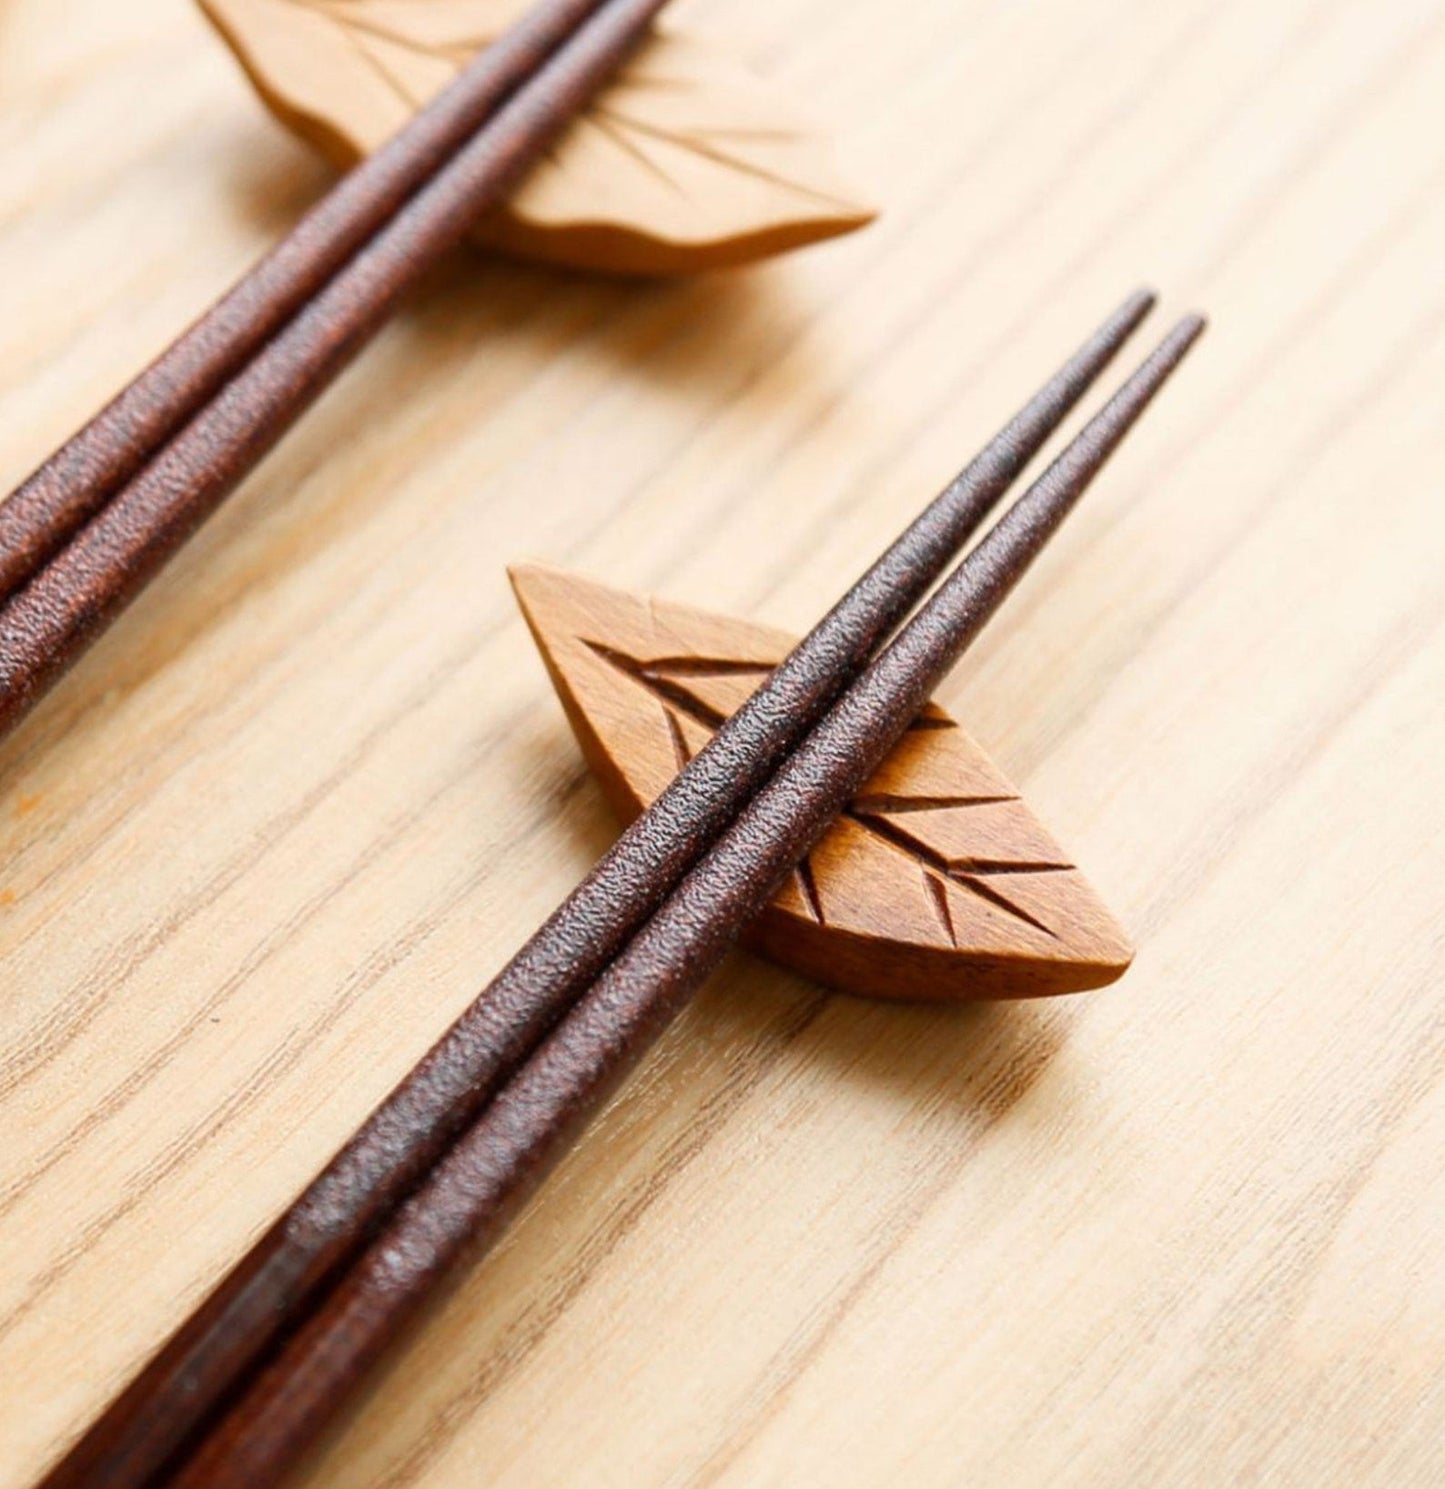 Imported Japanese Cherry Rabbit Solid Wood Chopsticks | Japanese Household, Pointed Couple Chopsticks, Cute Handmade Gift Chopsticks - -